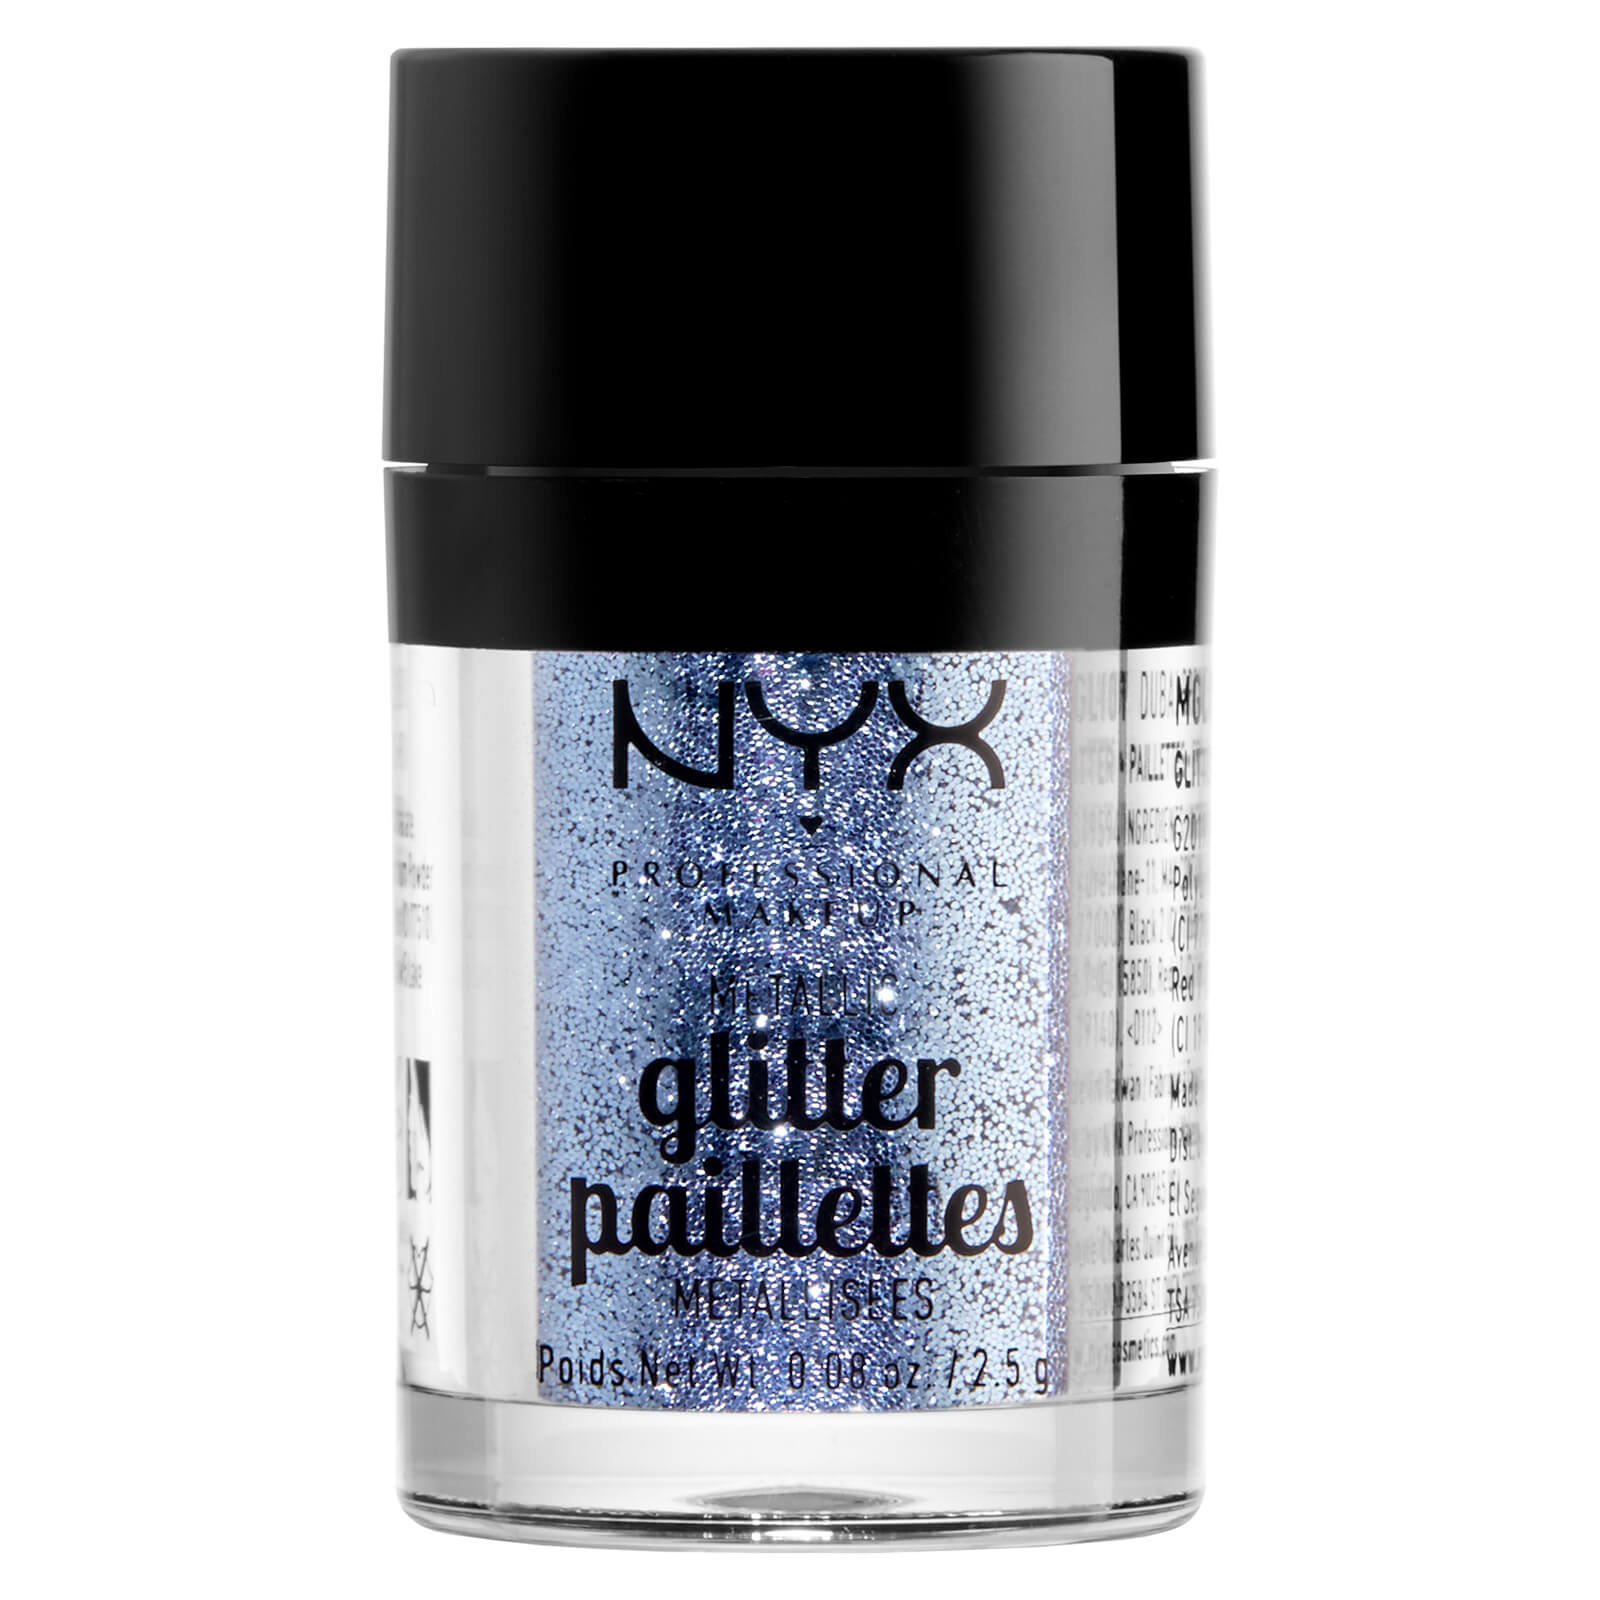 Image of NYX Professional Makeup glitter metallizzati - Darkside